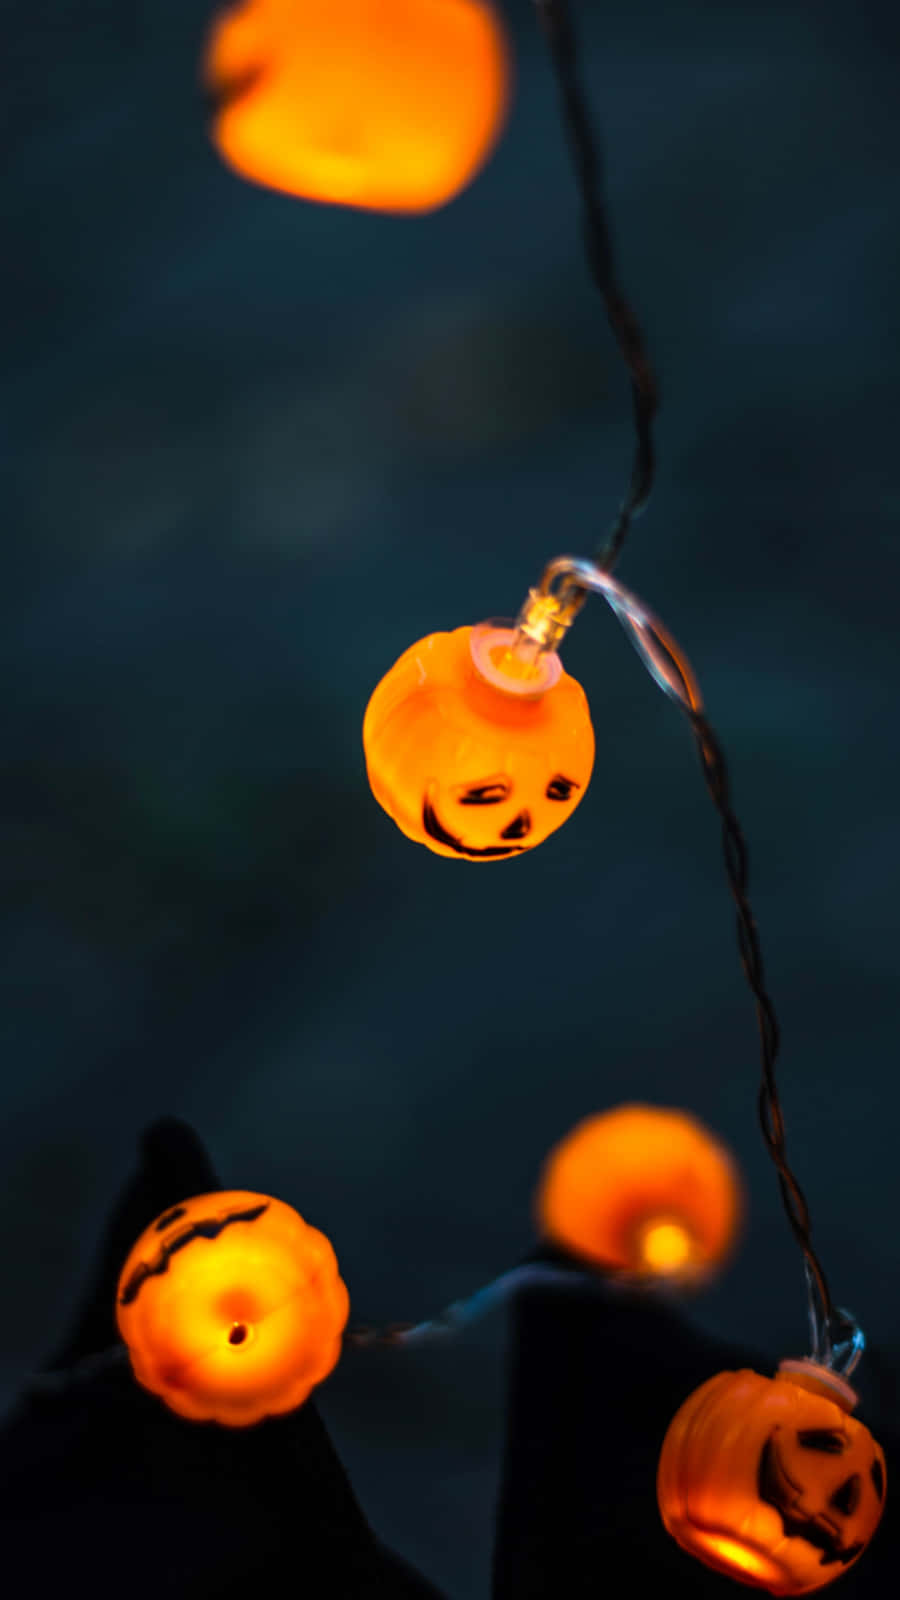 A string of orange light bulbs with pumpkin faces - Cute Halloween